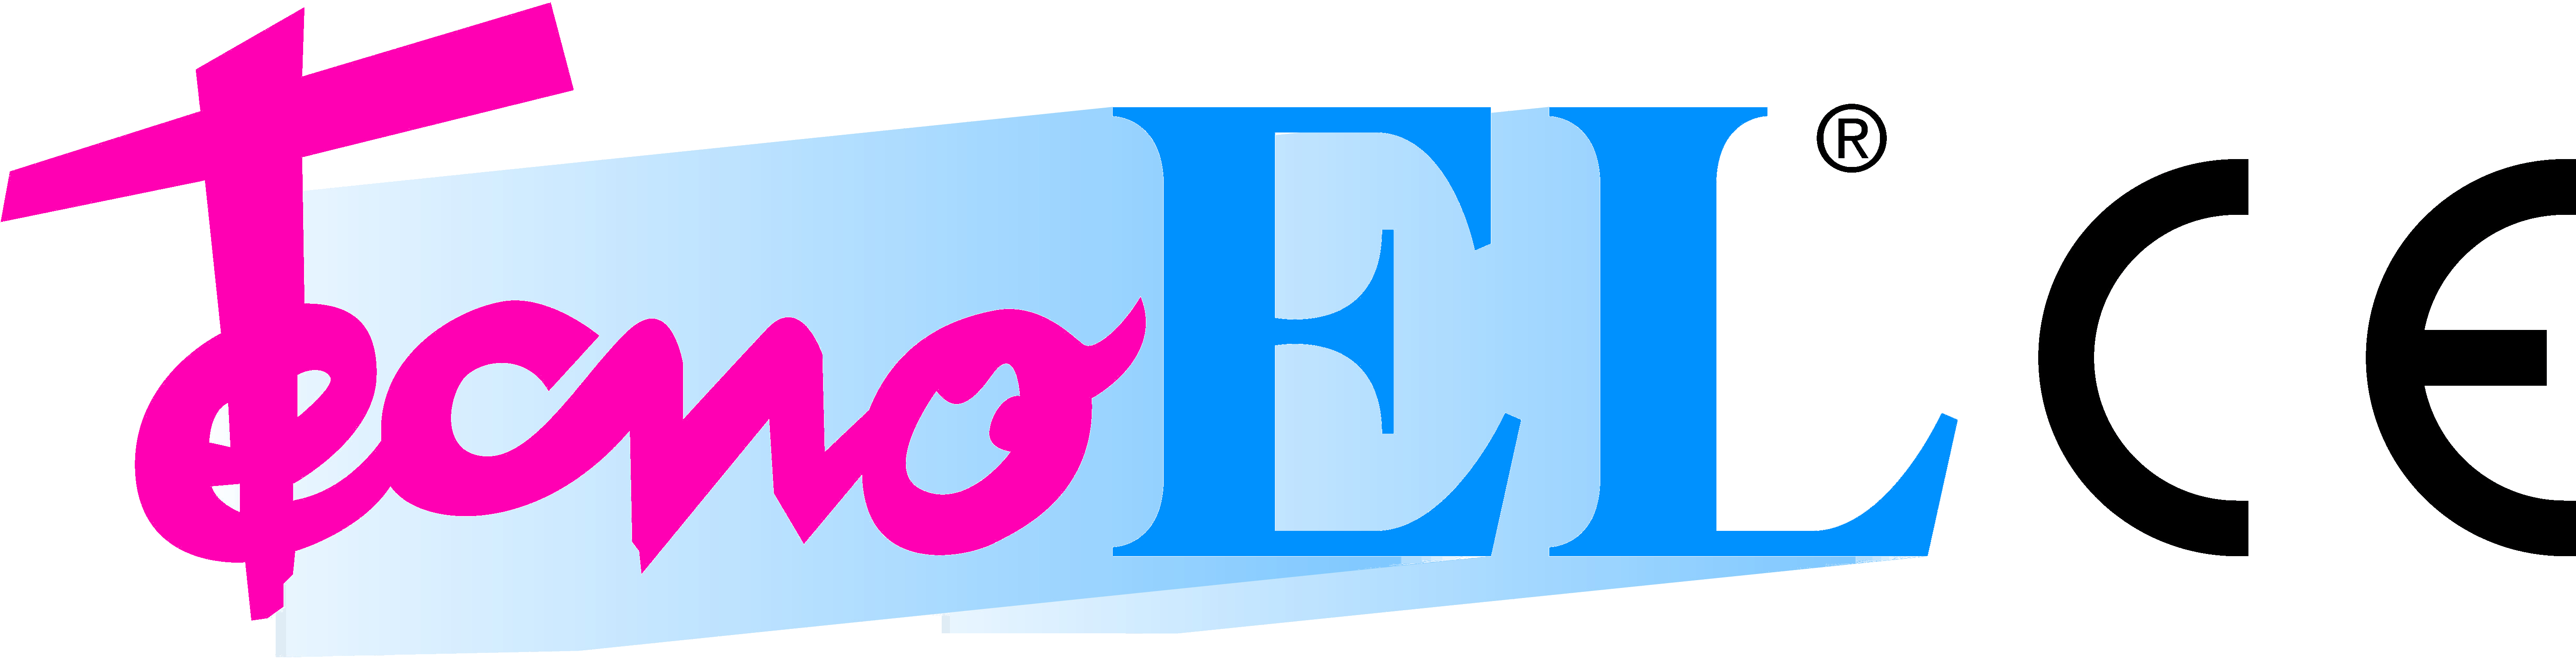 TecnoEl Logo